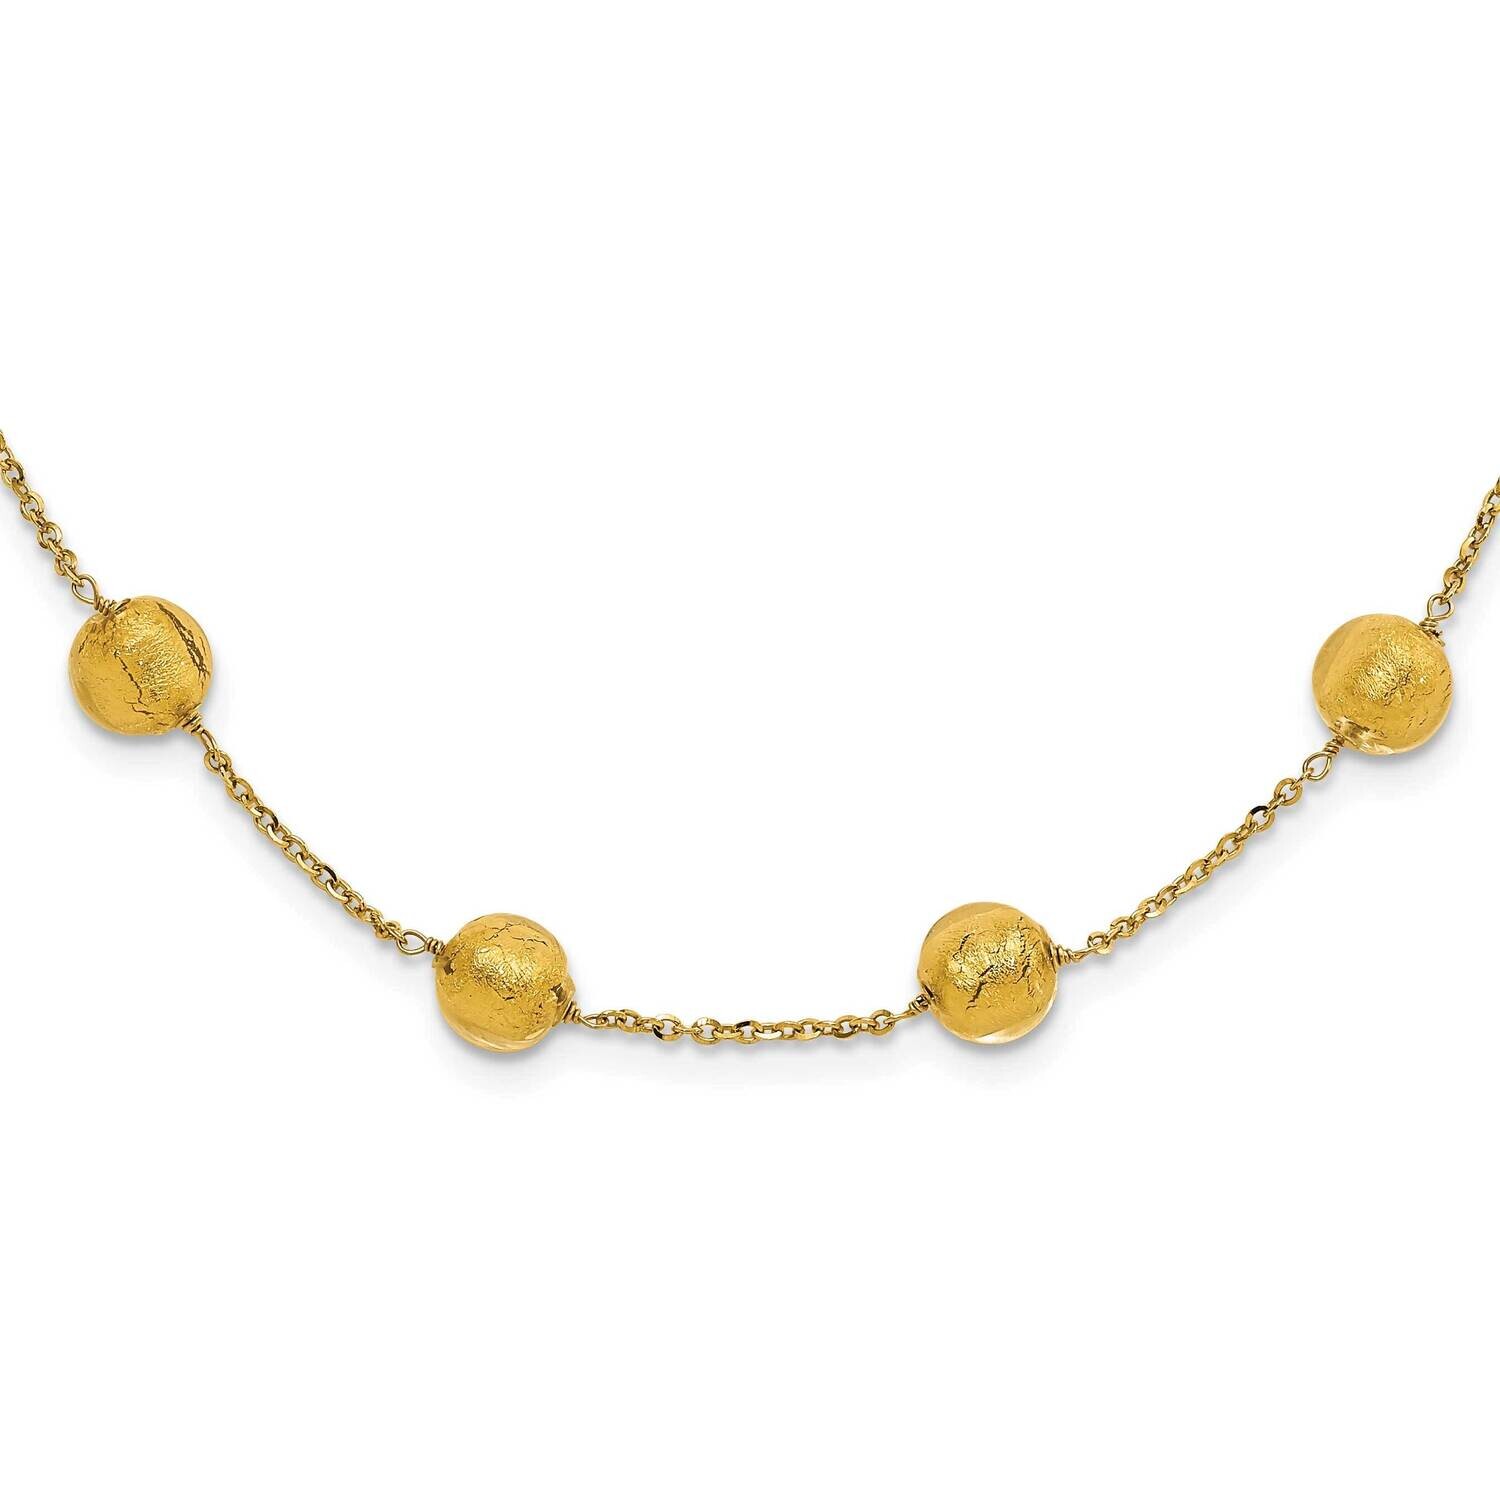 Murano Glass Bead & Chain Necklace 16 Inch 14k Gold MUR26-16